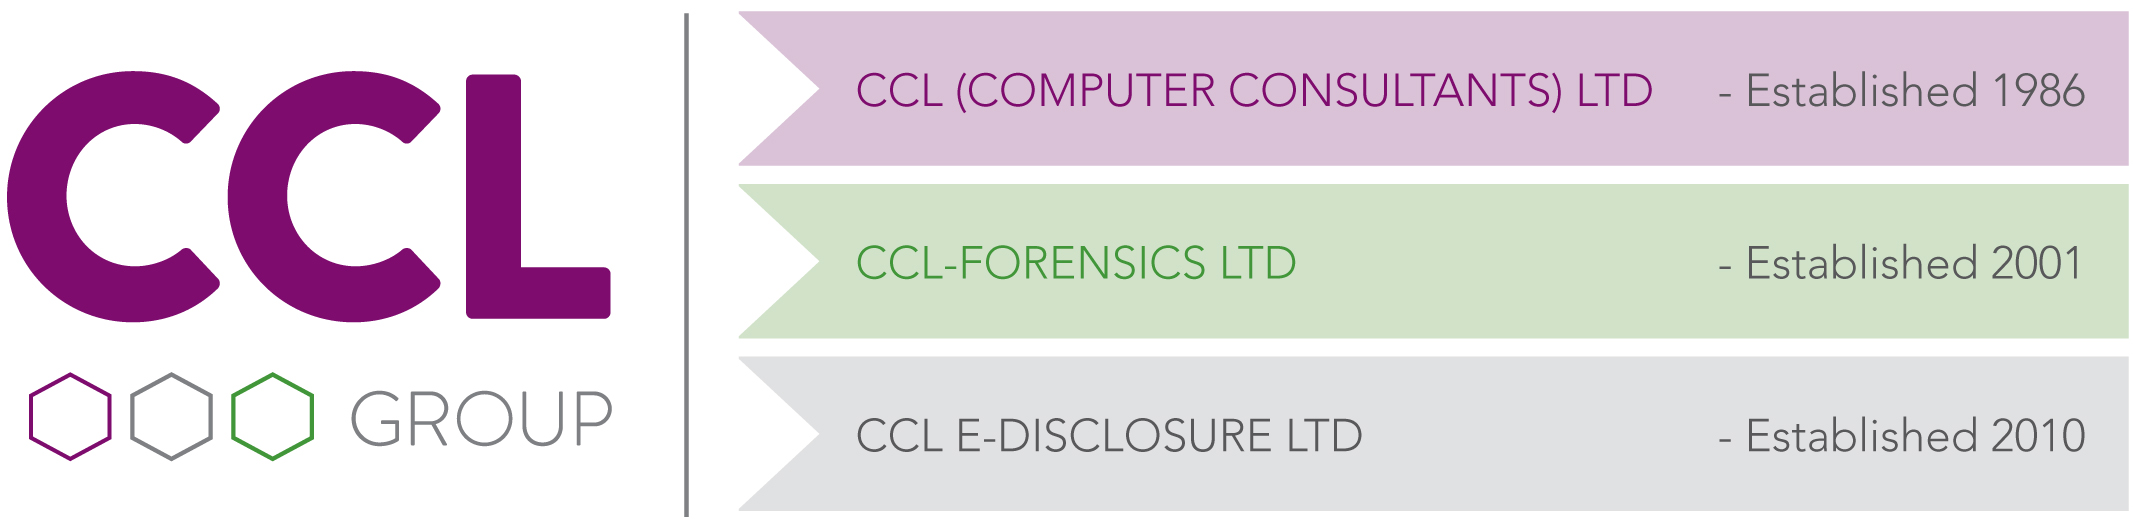 CCL Solutions Group Ltd: